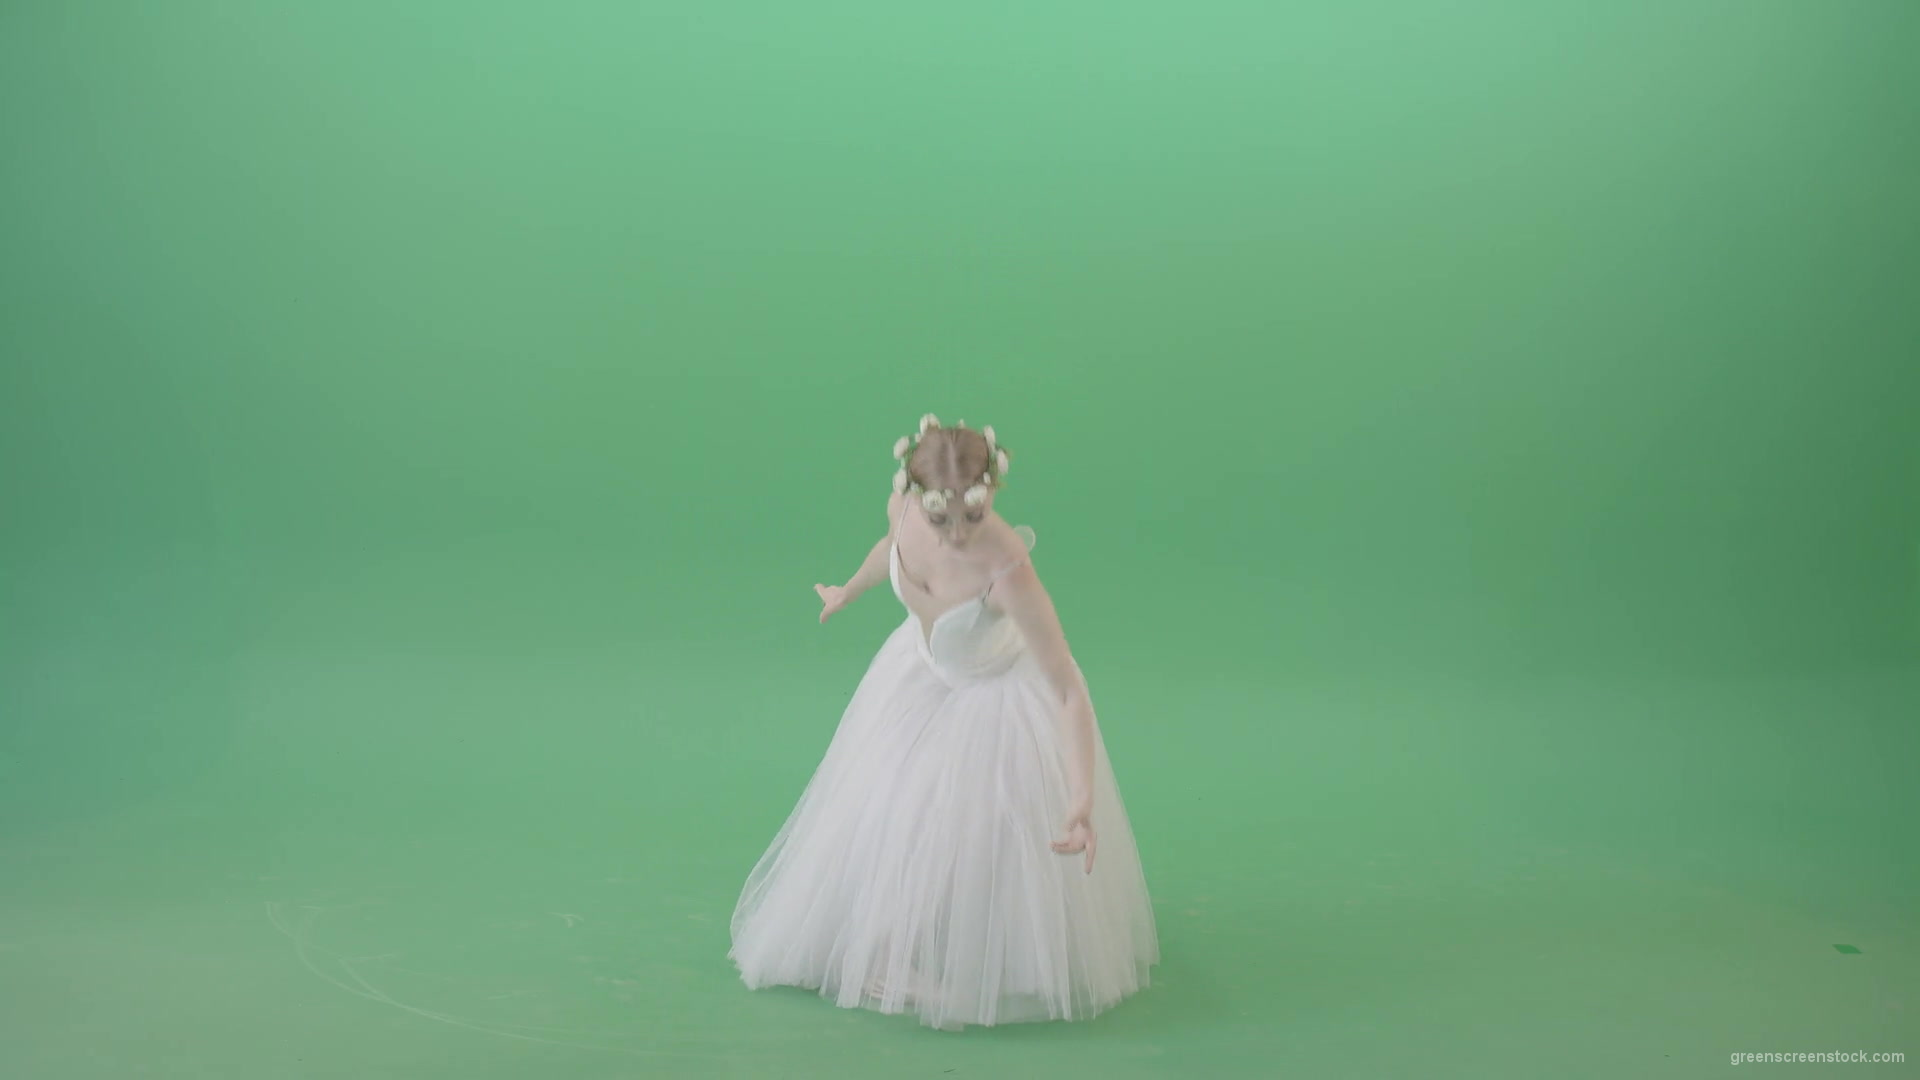 Royal-elegant-greetings-regards-by-Ballet-Dancer-Girl-in-White-Dress-on-Green-Screen-4K-Video-Clip-1920_008 Green Screen Stock